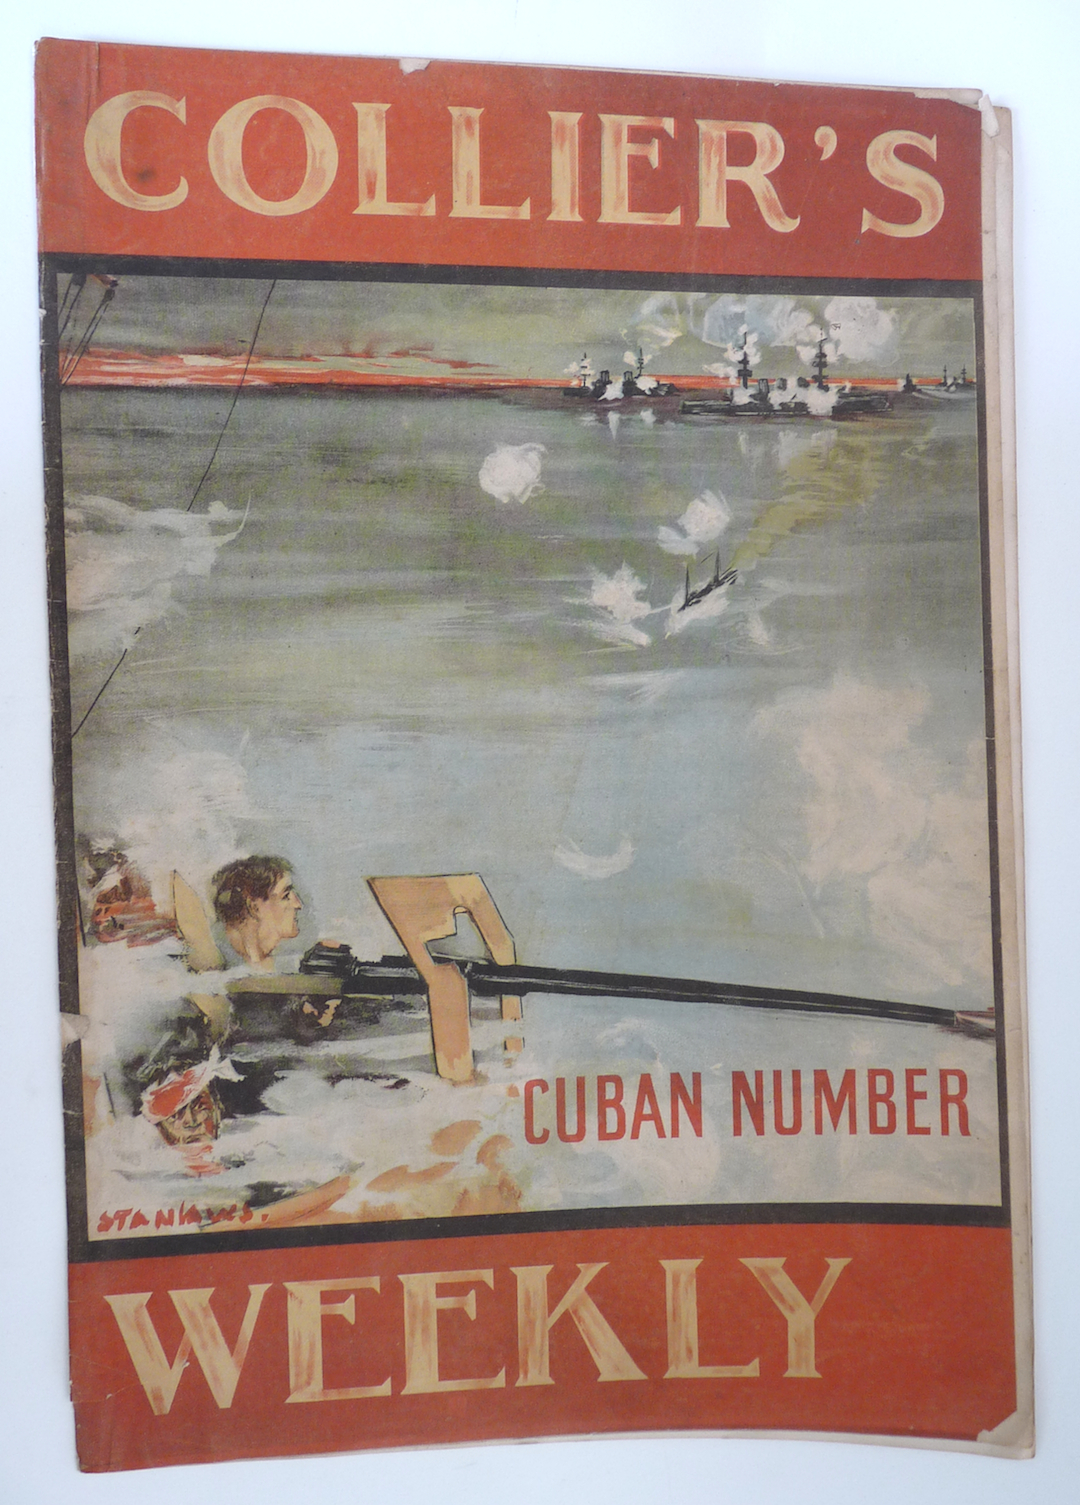 Collier's Weekley vintage magazine May 1898 Spanish Cuban War issue - $34.00